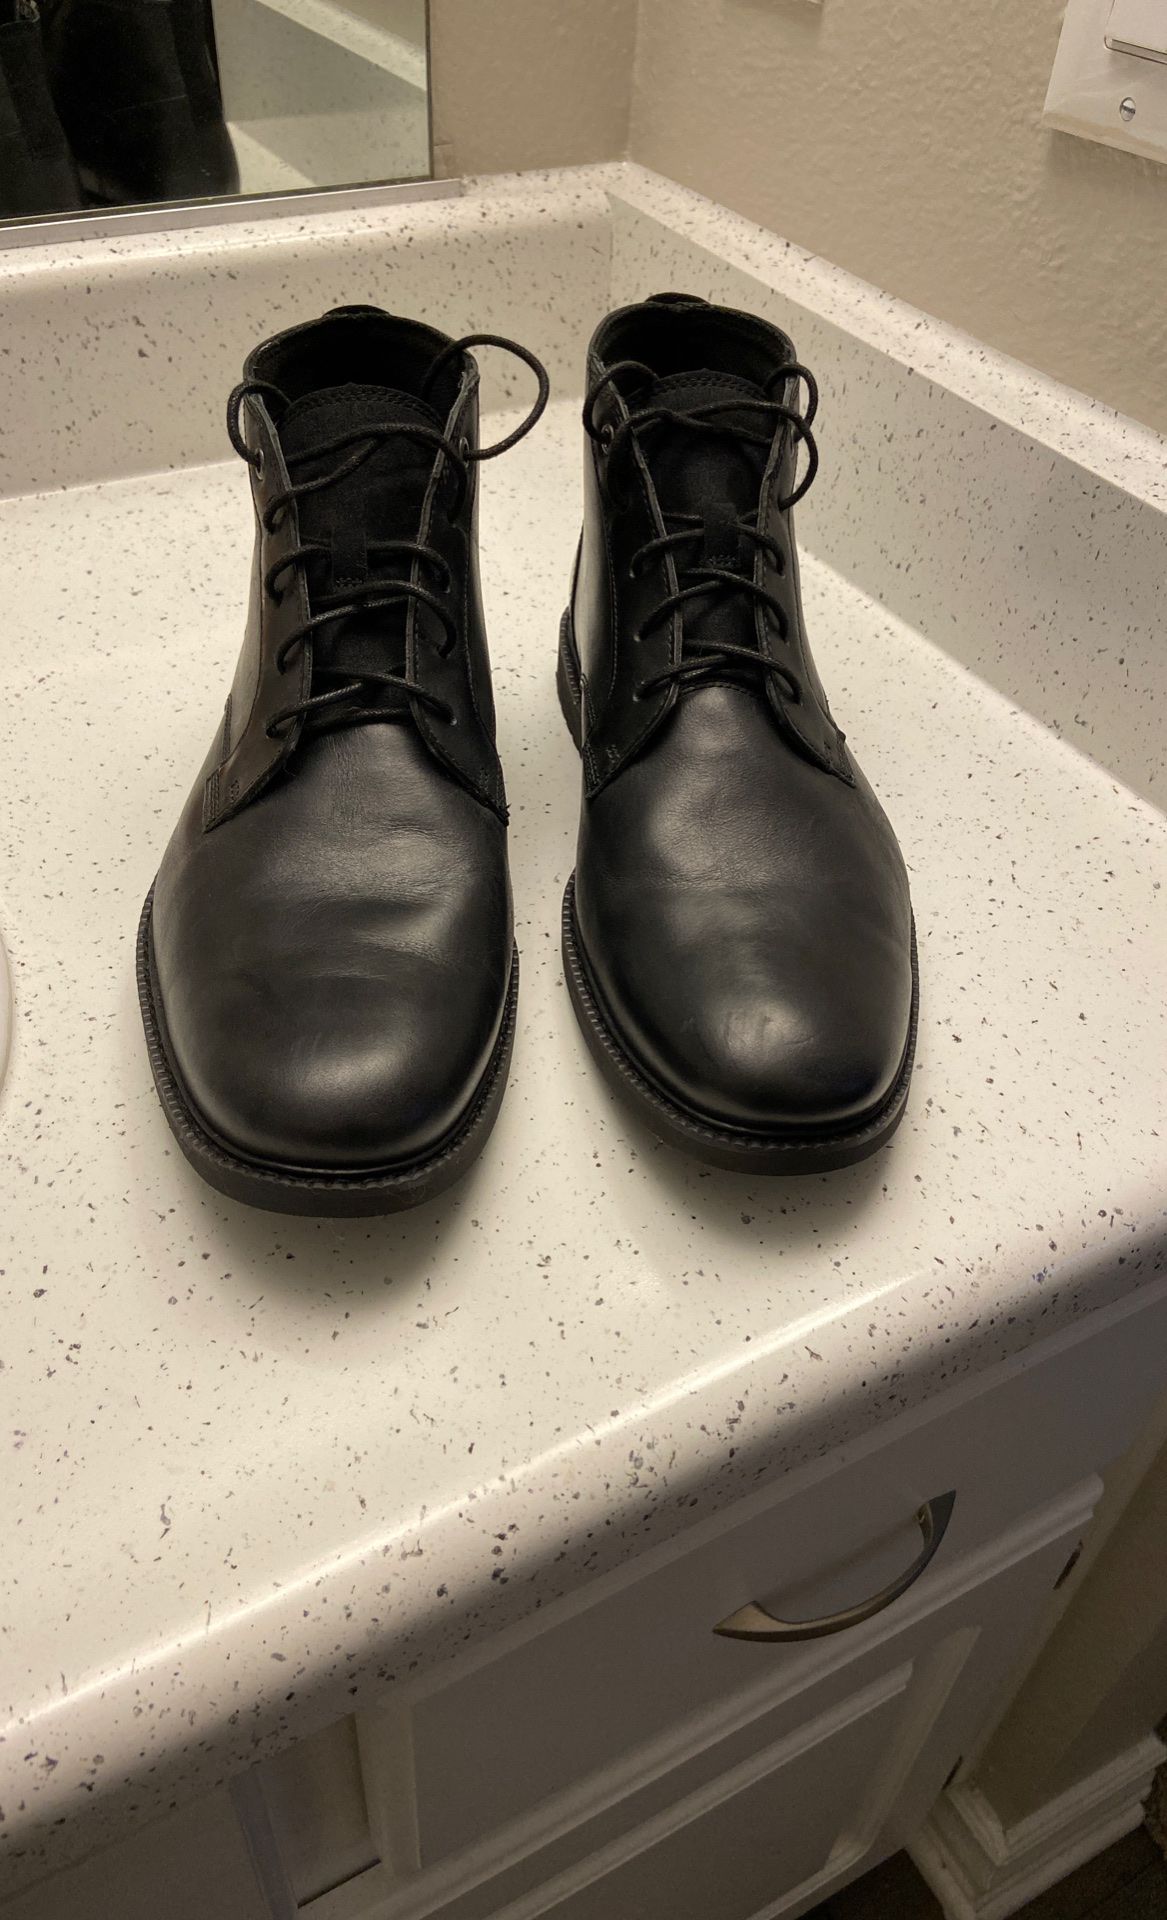 Timberland boots size 9.5